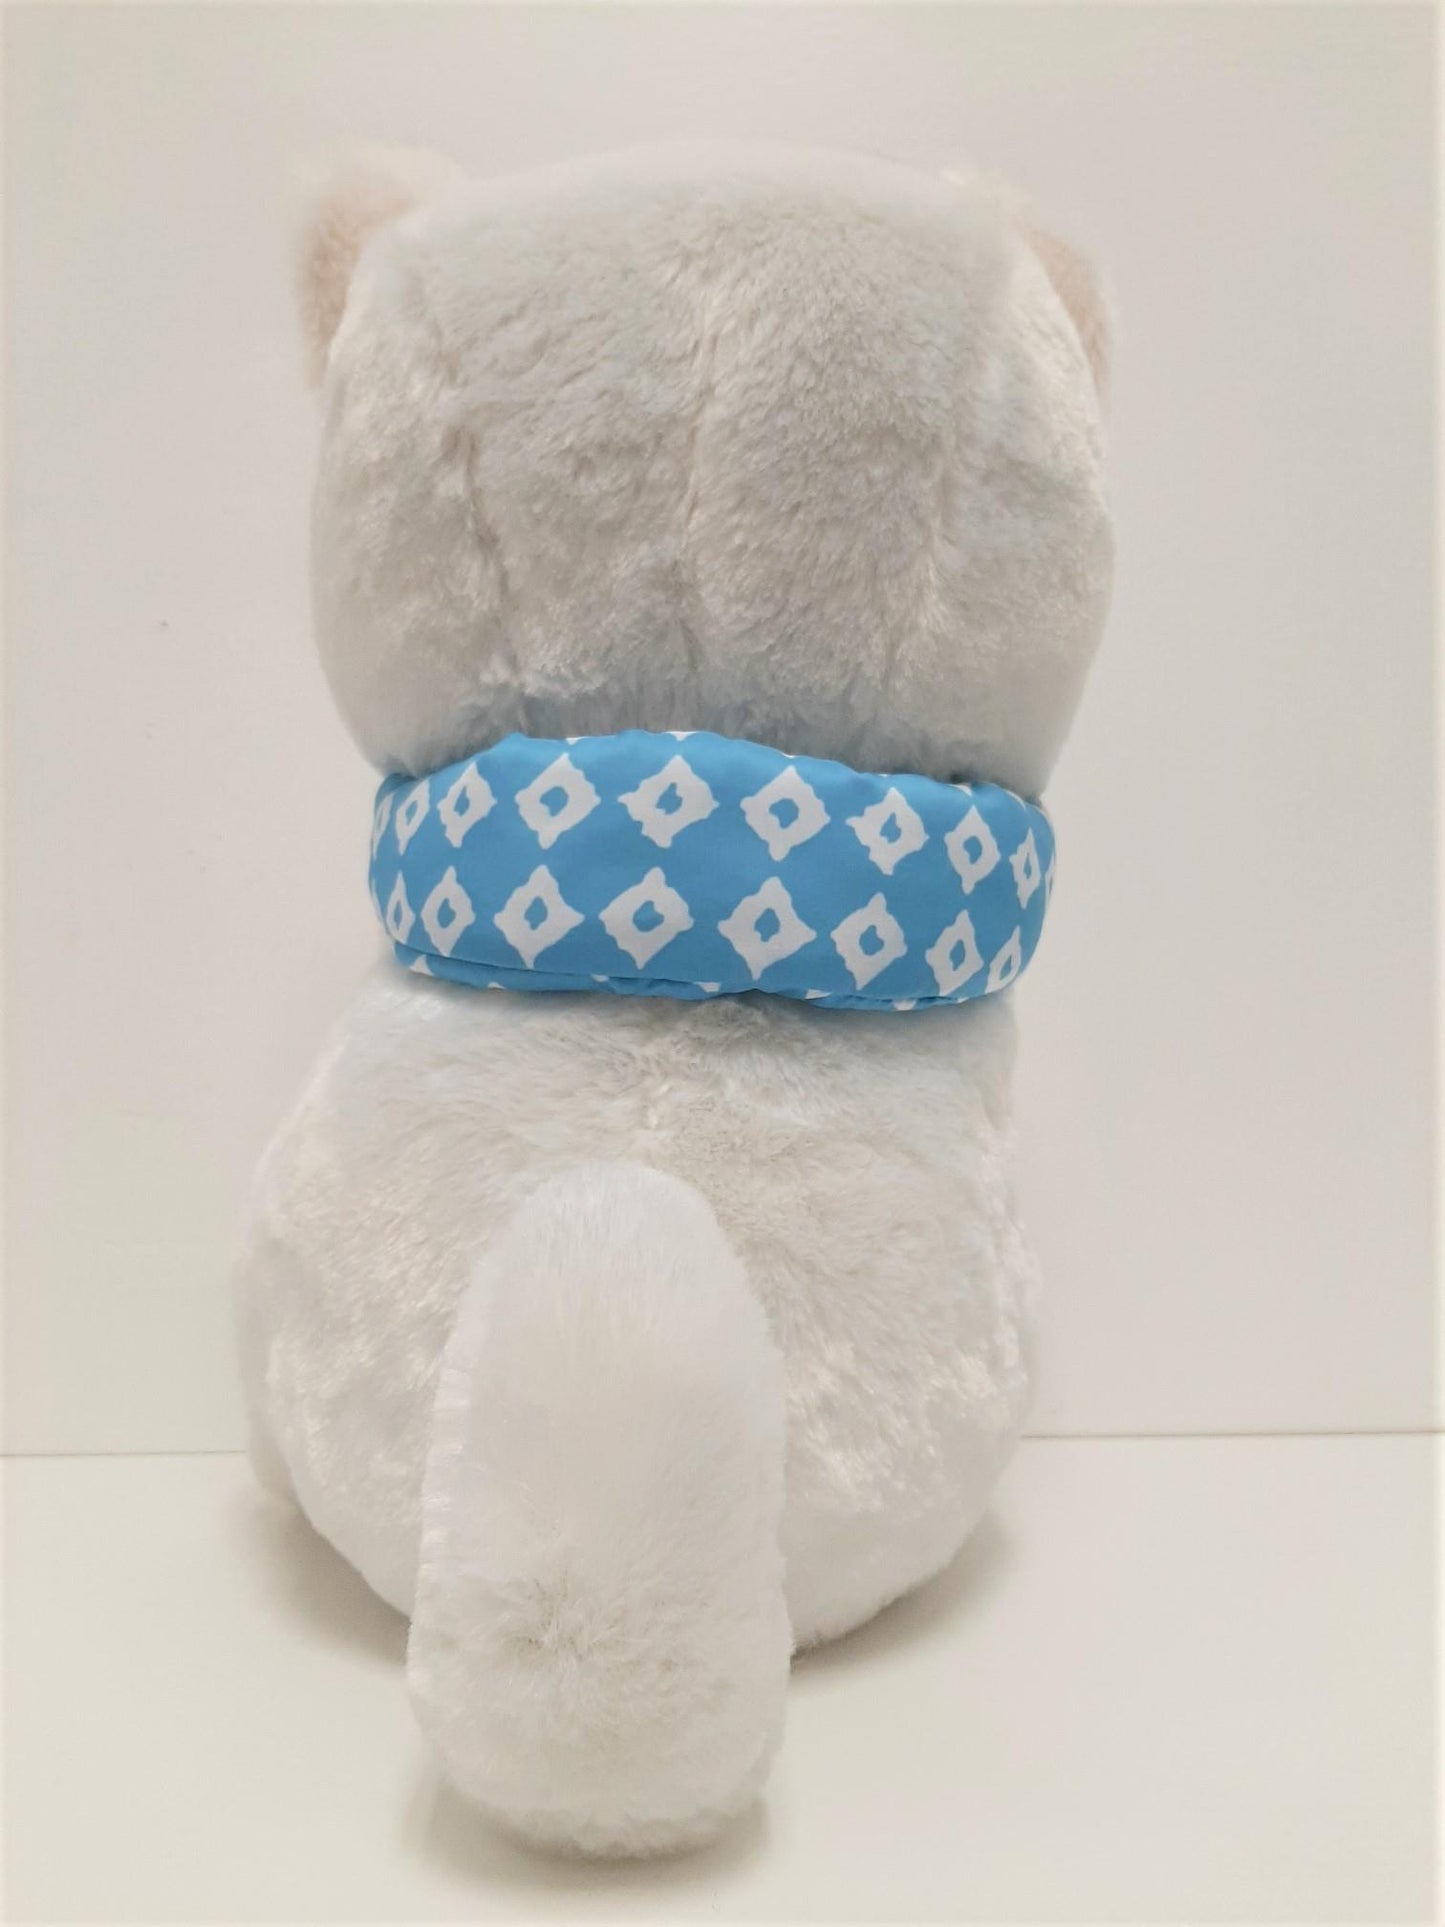 Amuse: White Puppy Blue Scarf 16.5" Plush